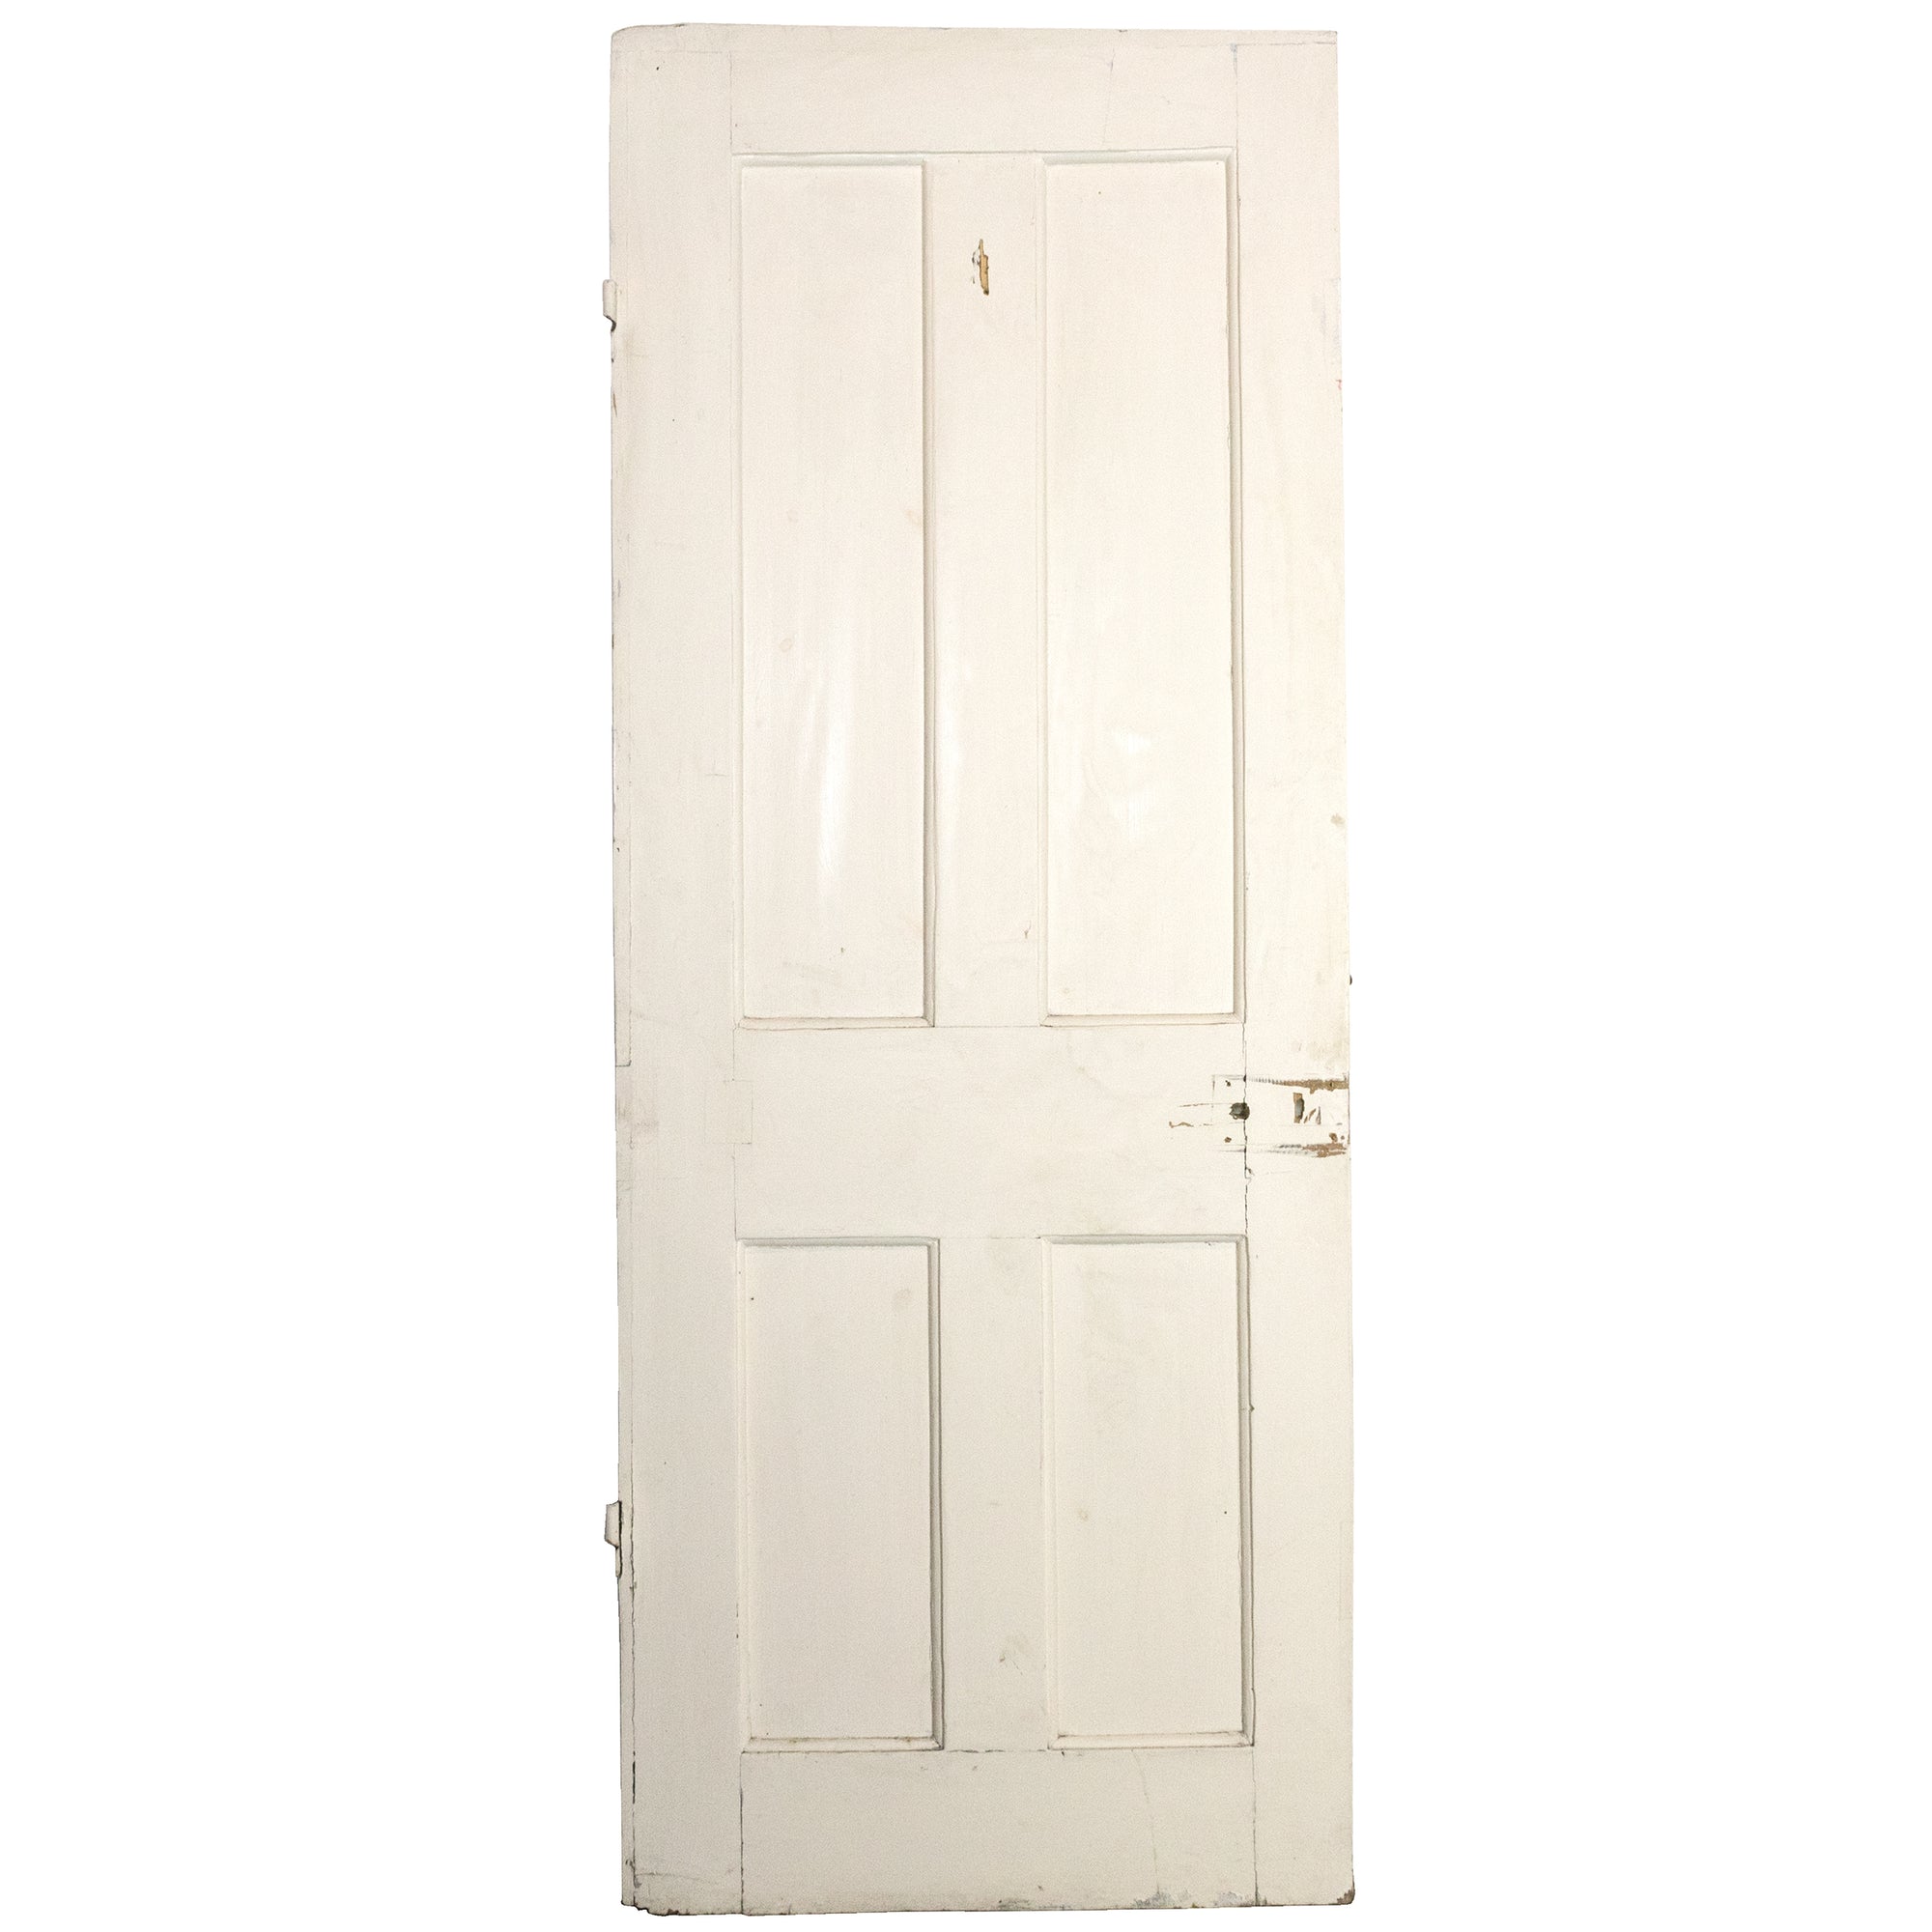 Antique Victorian 4 Panel Door - 192cm x 74.5cm | The Architectural Forum